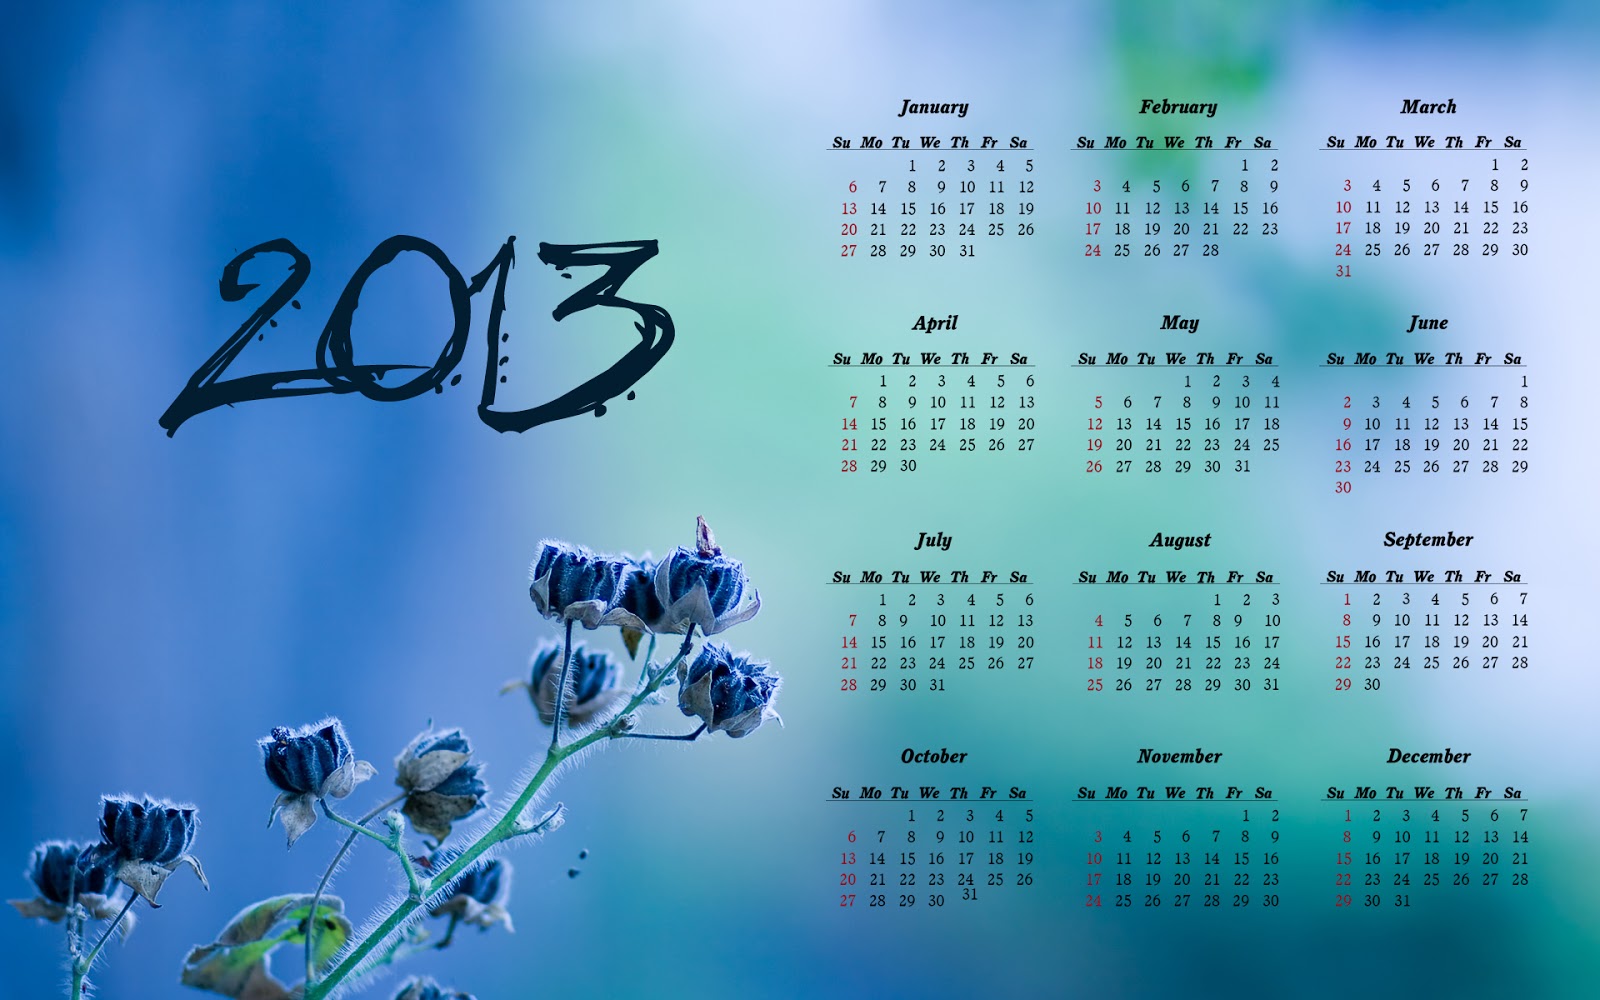  Year Calendar 2013 Calendar 2013 2013 Calendar Desktop Background